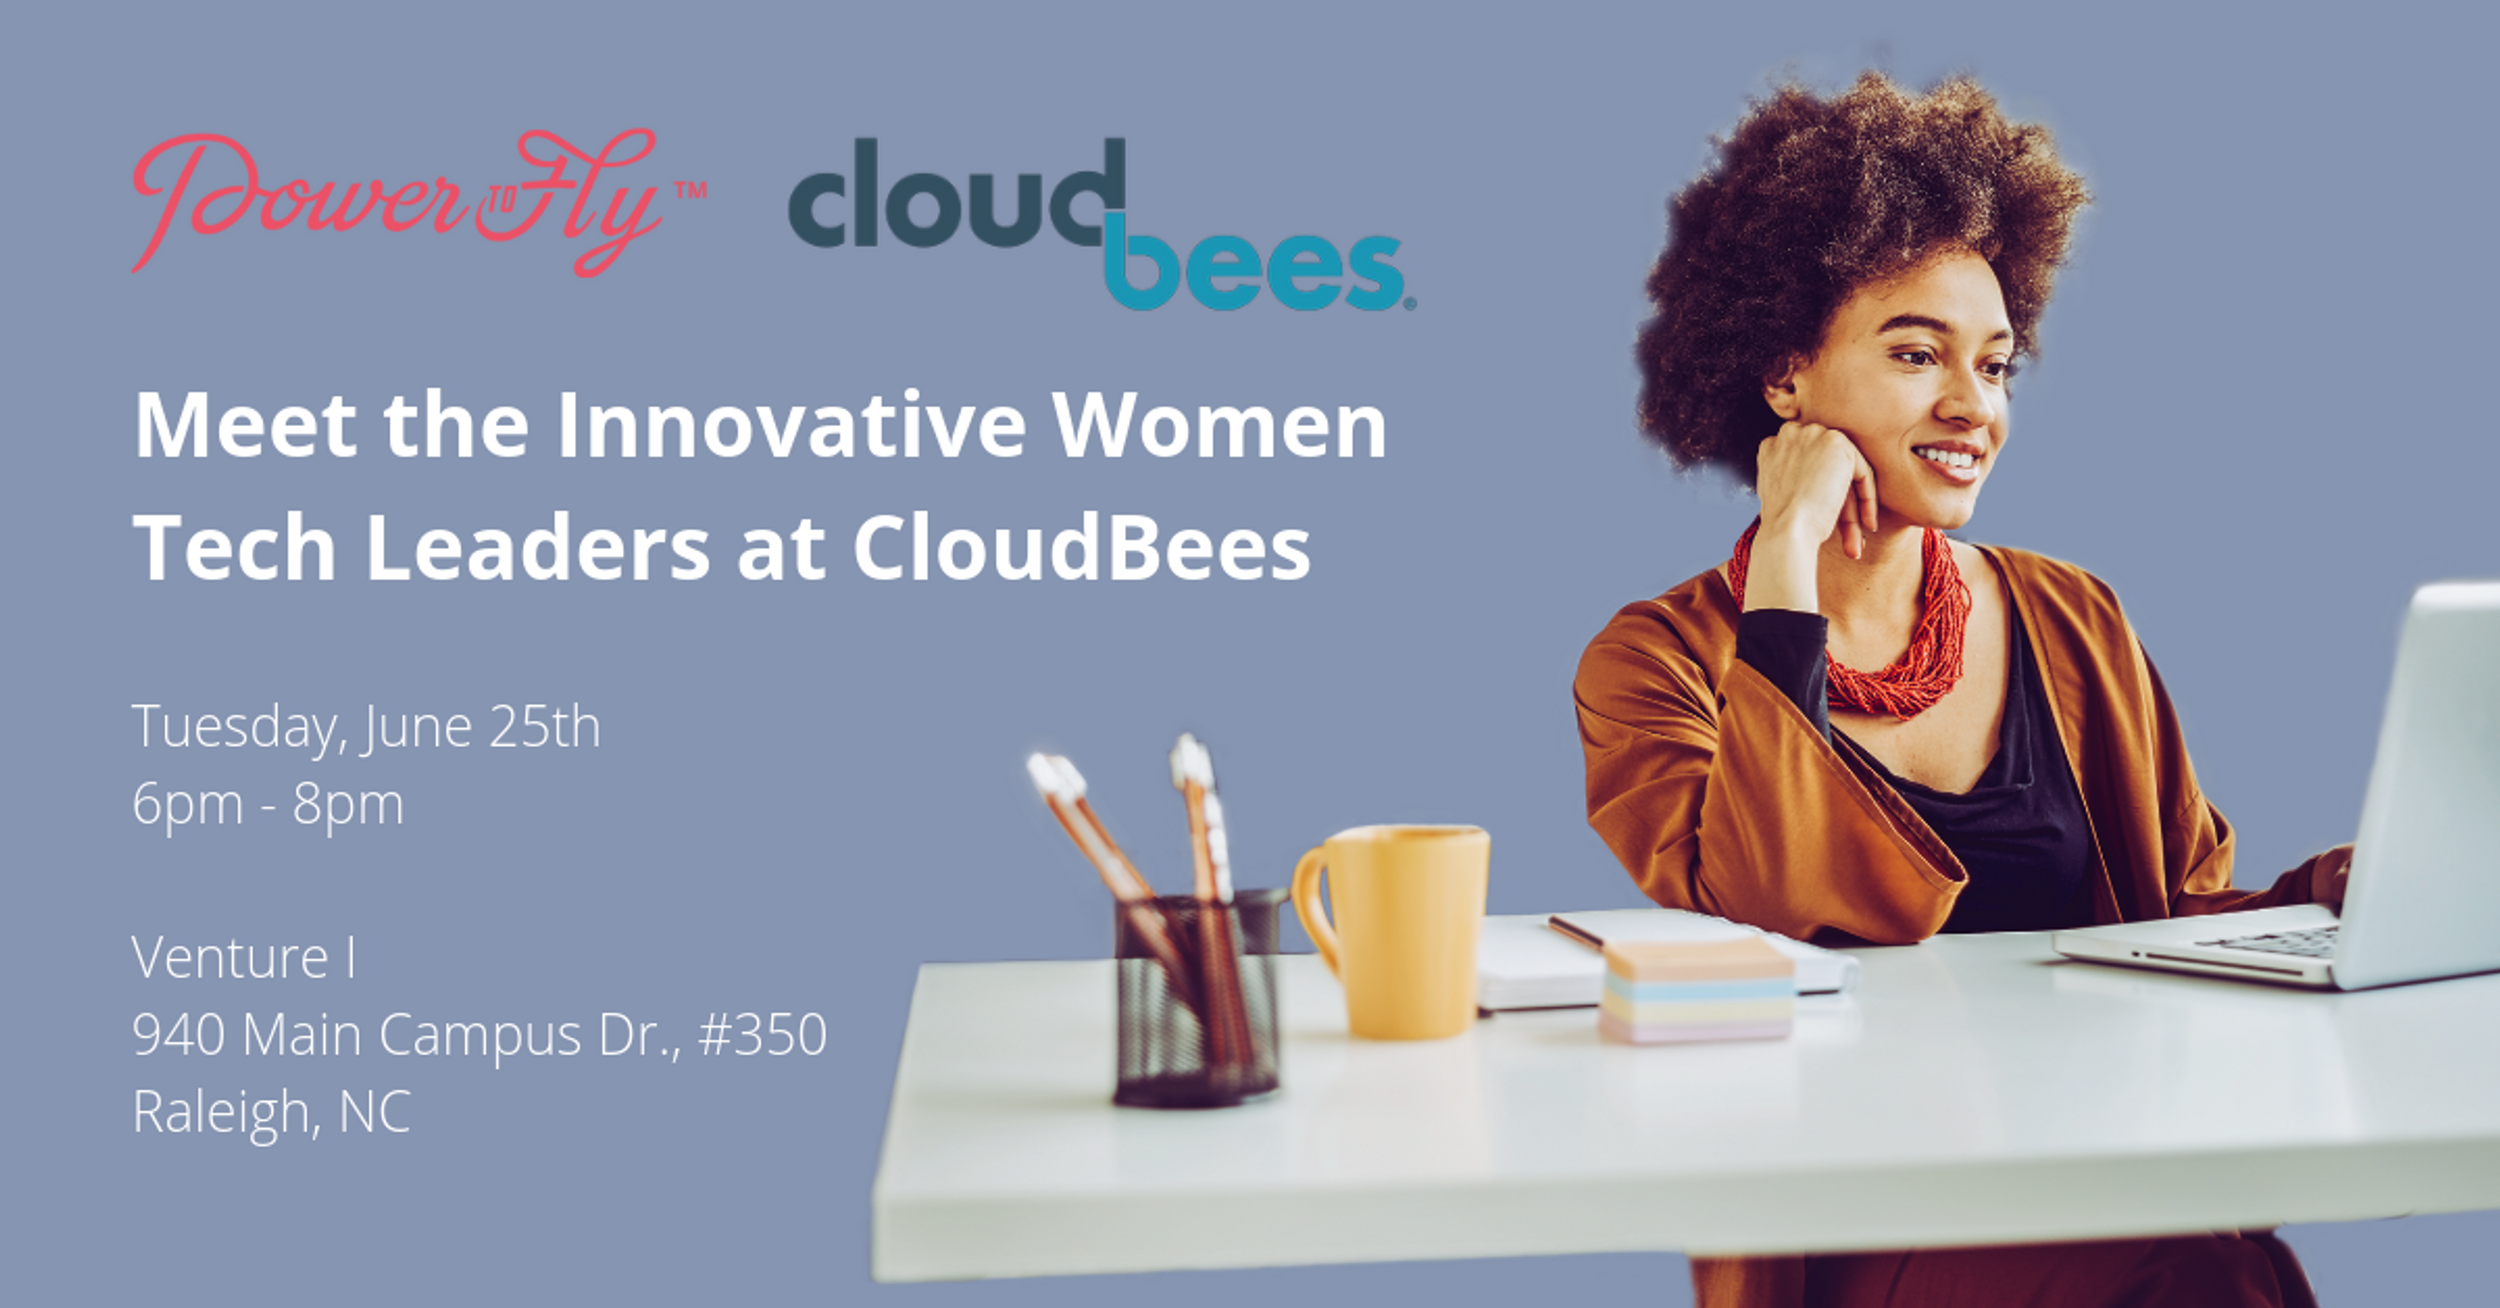 Meet the Innovative Women Tech Leaders at CloudBees